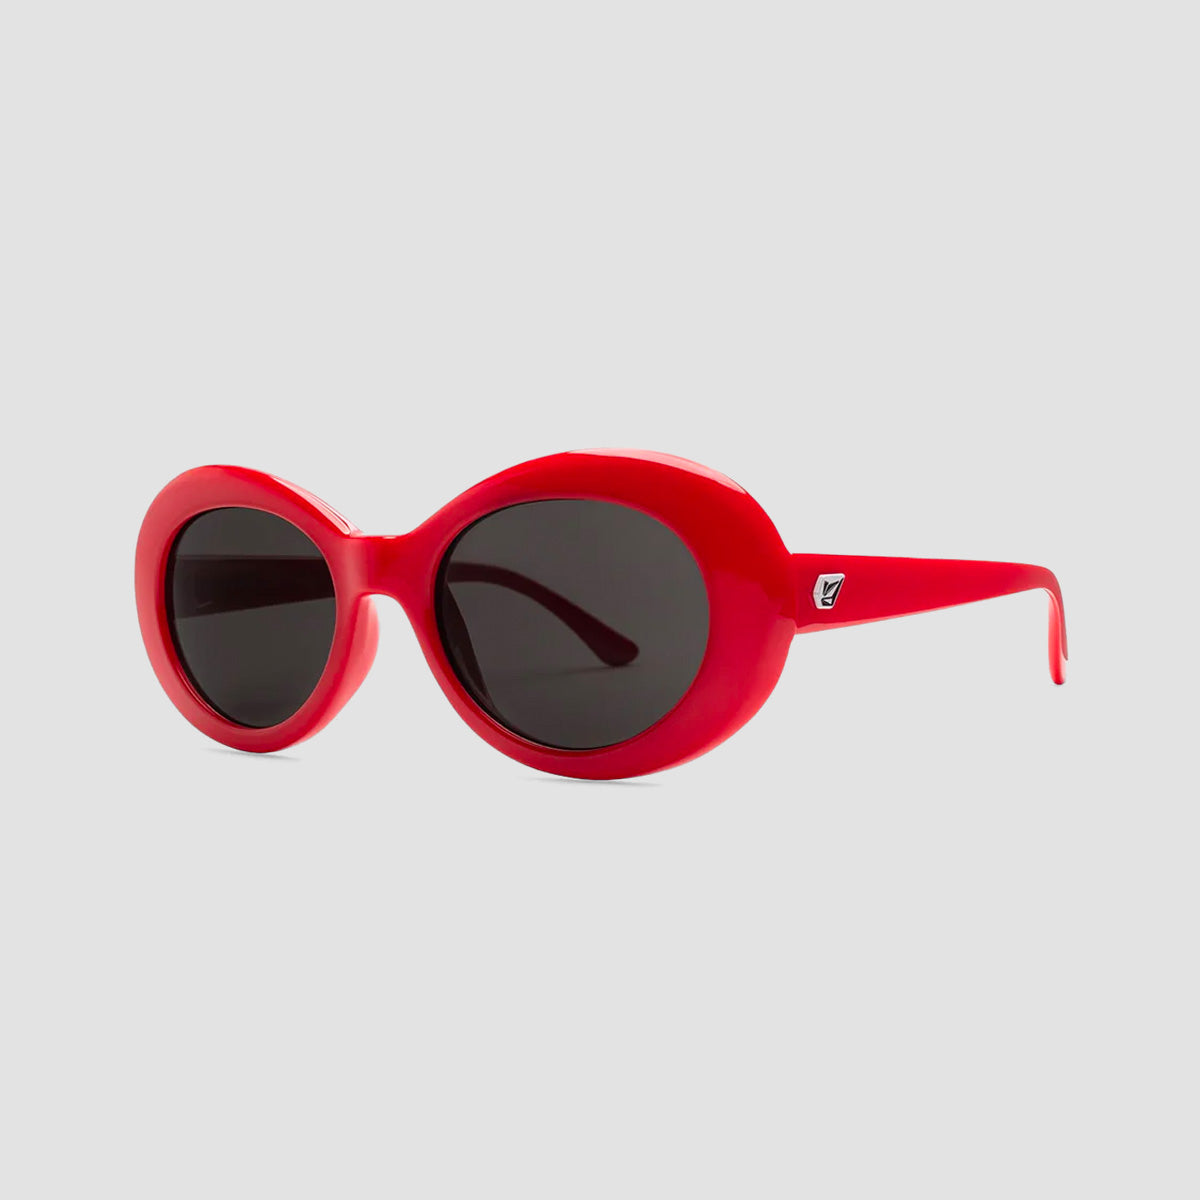 Volcom Stoned Sunglasses Gloss Red/Grey - Unisex